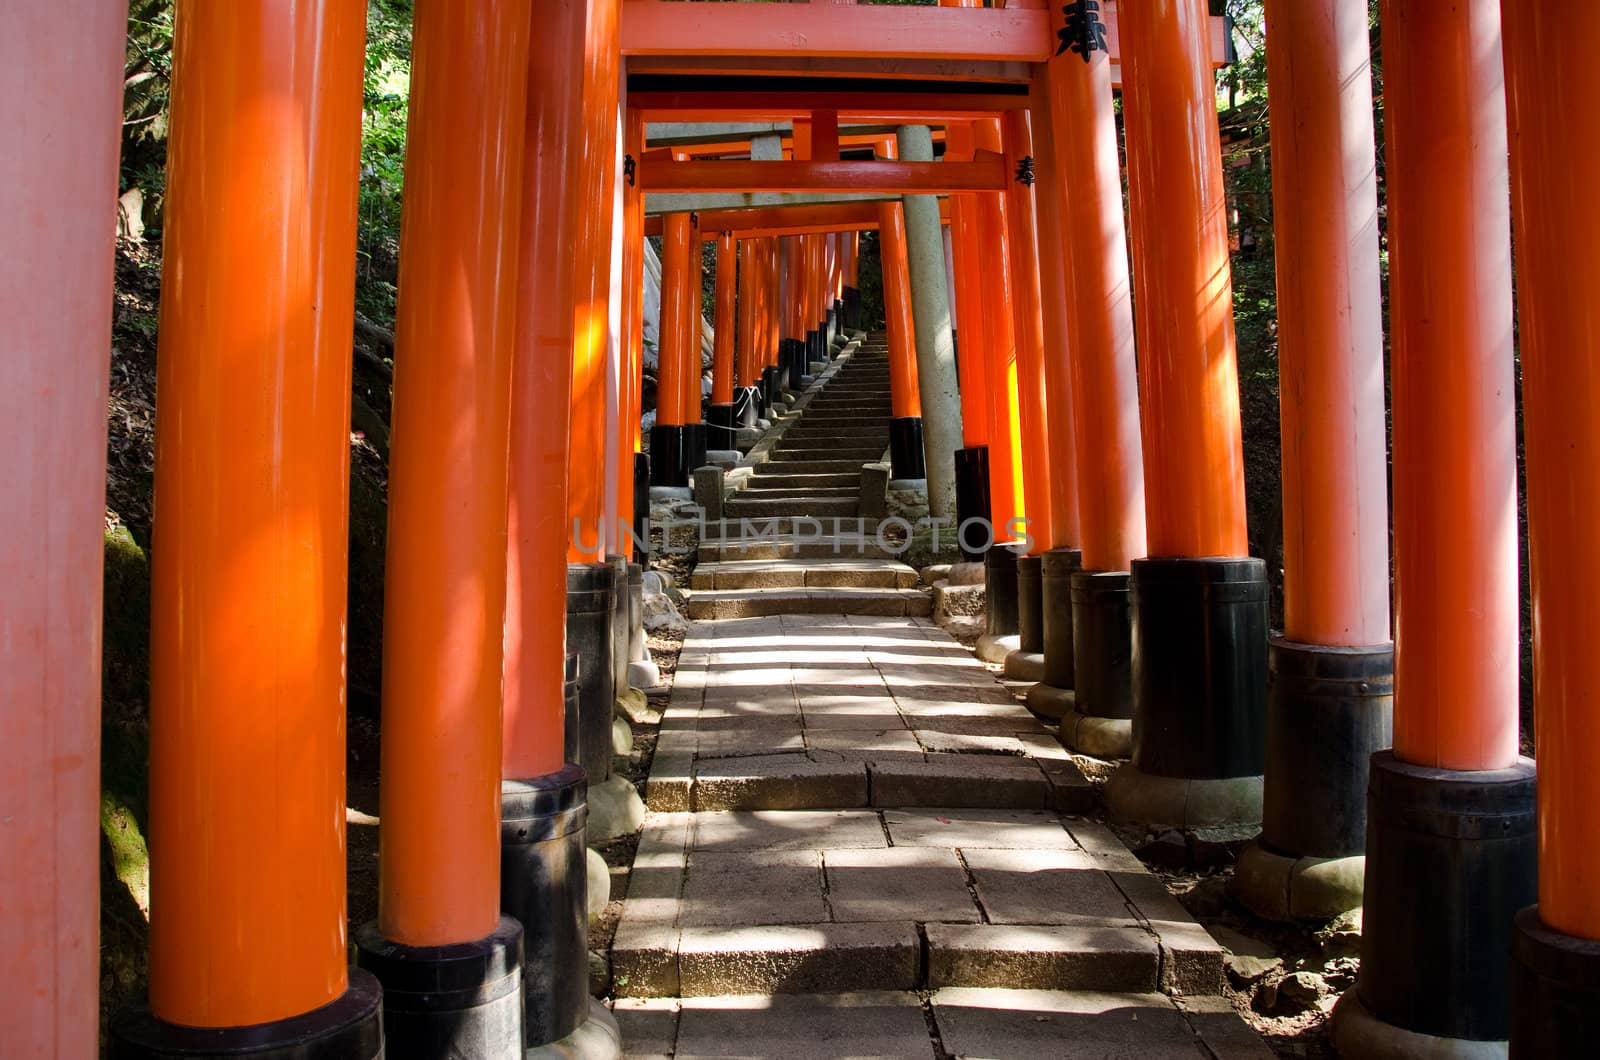 Torii Gates at the Fushimi Inari Taisha Shrine in Kyoto, Japan